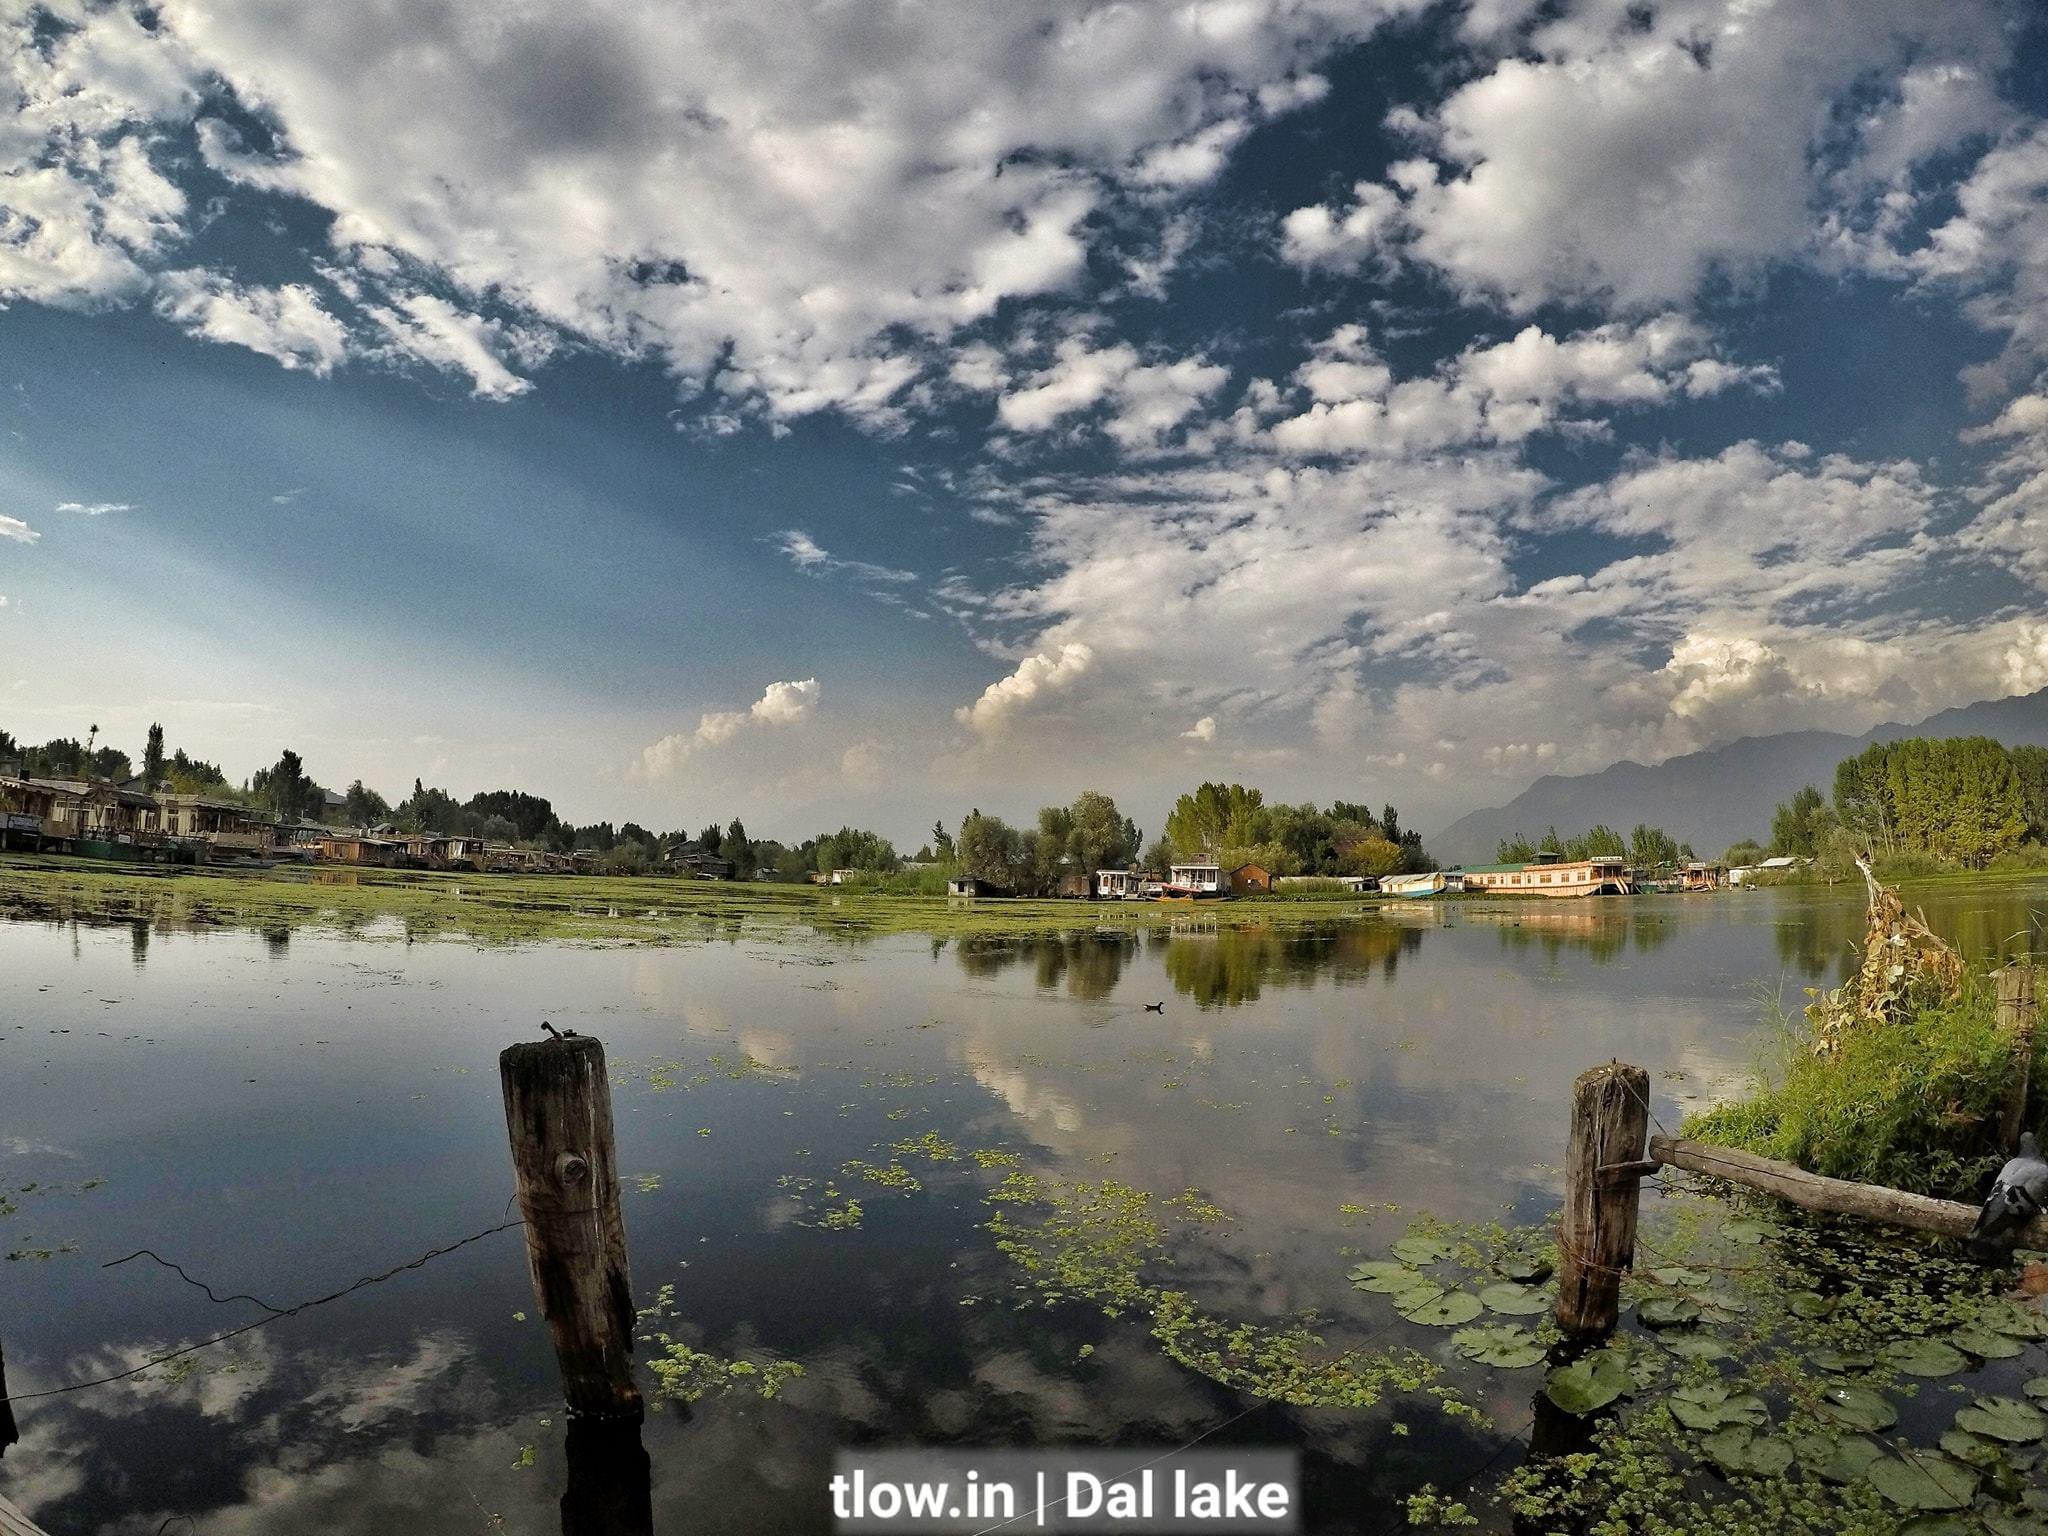 Dal lake